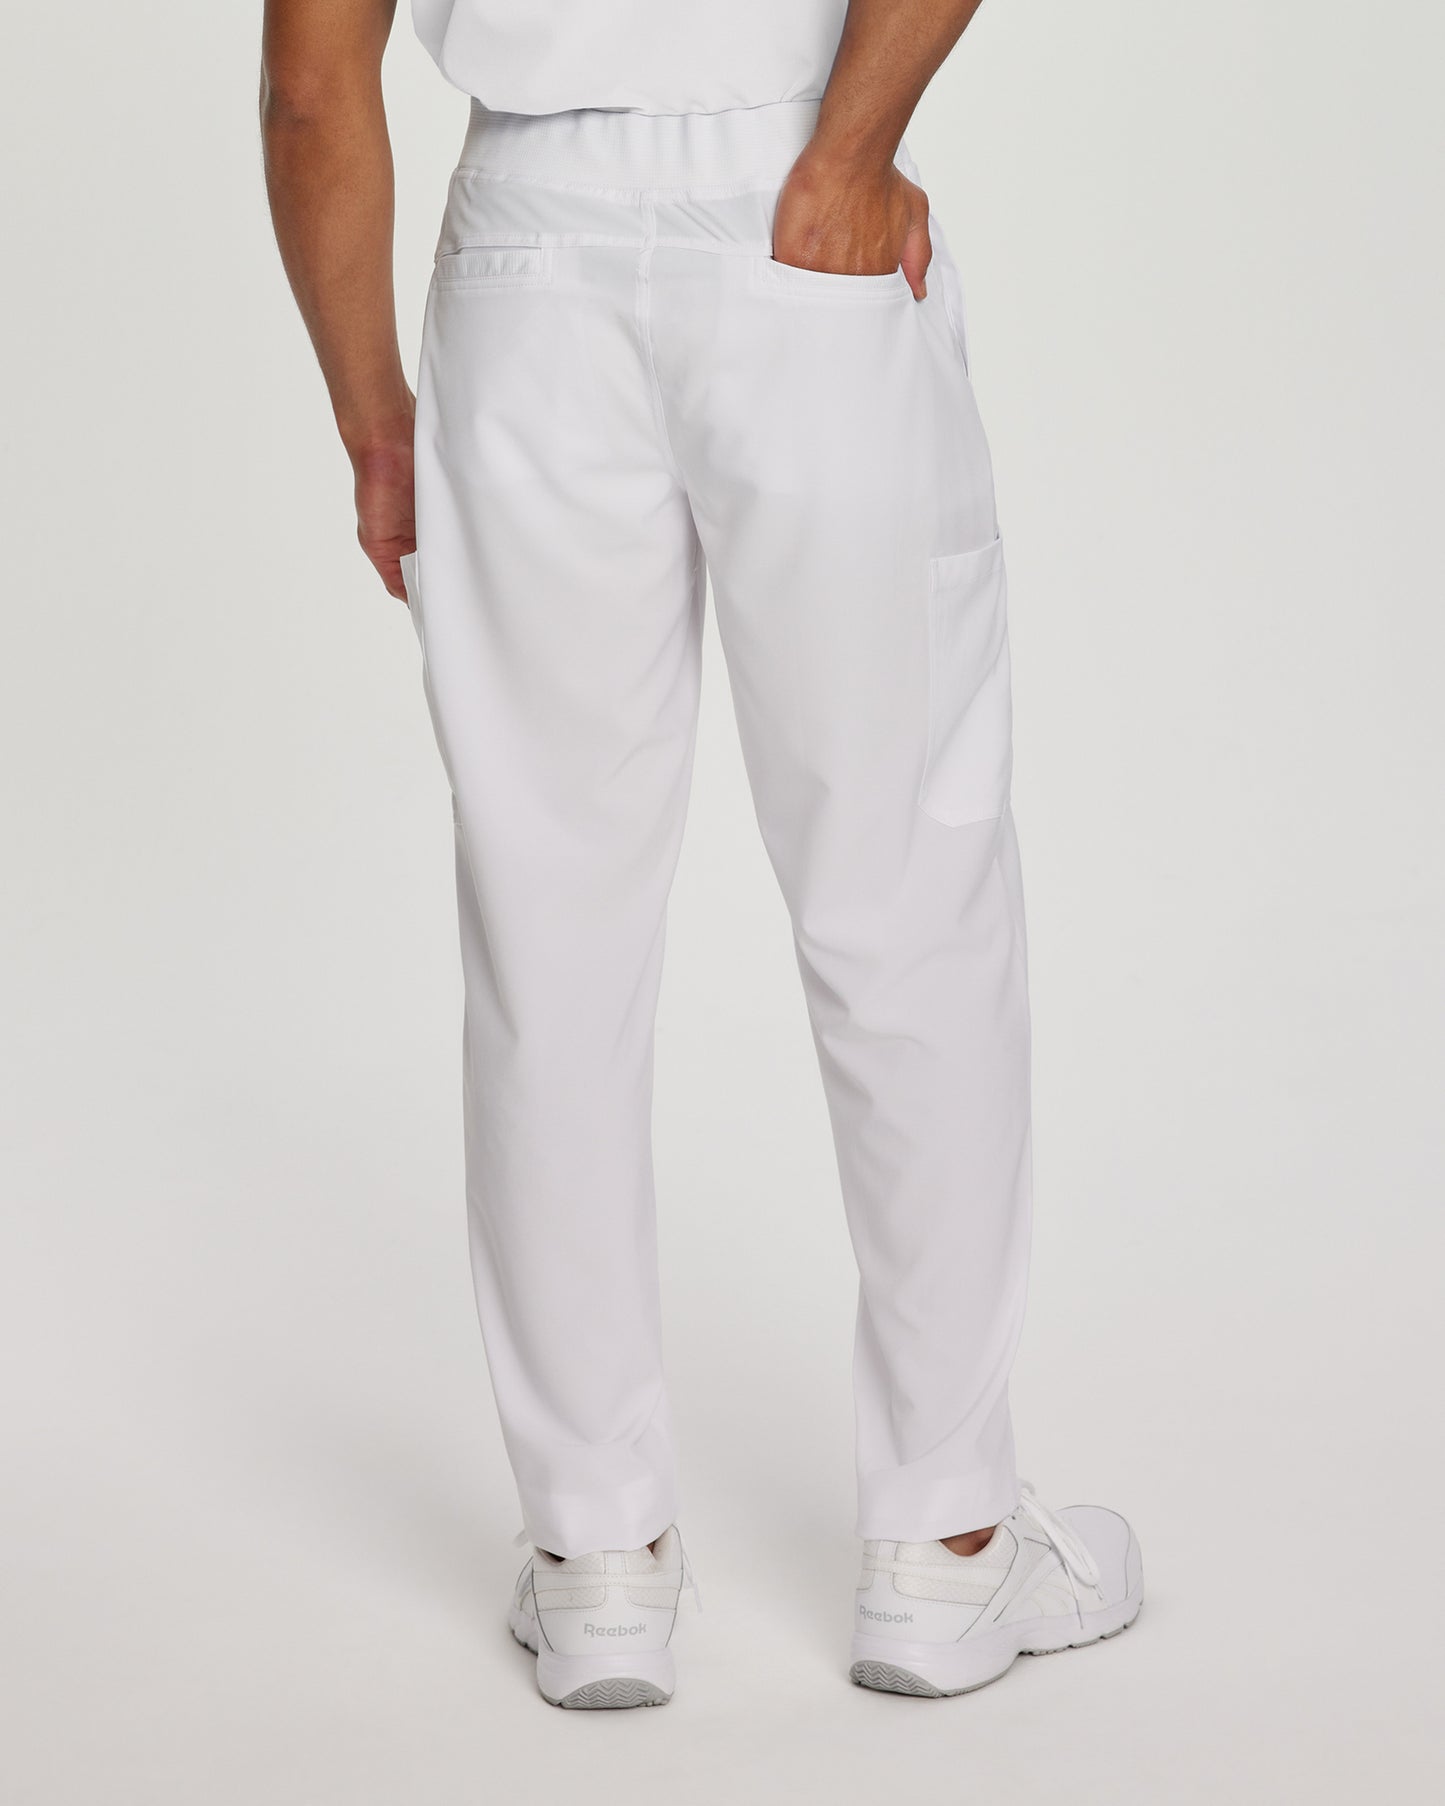 229S Men's FIT White Cross Short Yoga-Style Pant